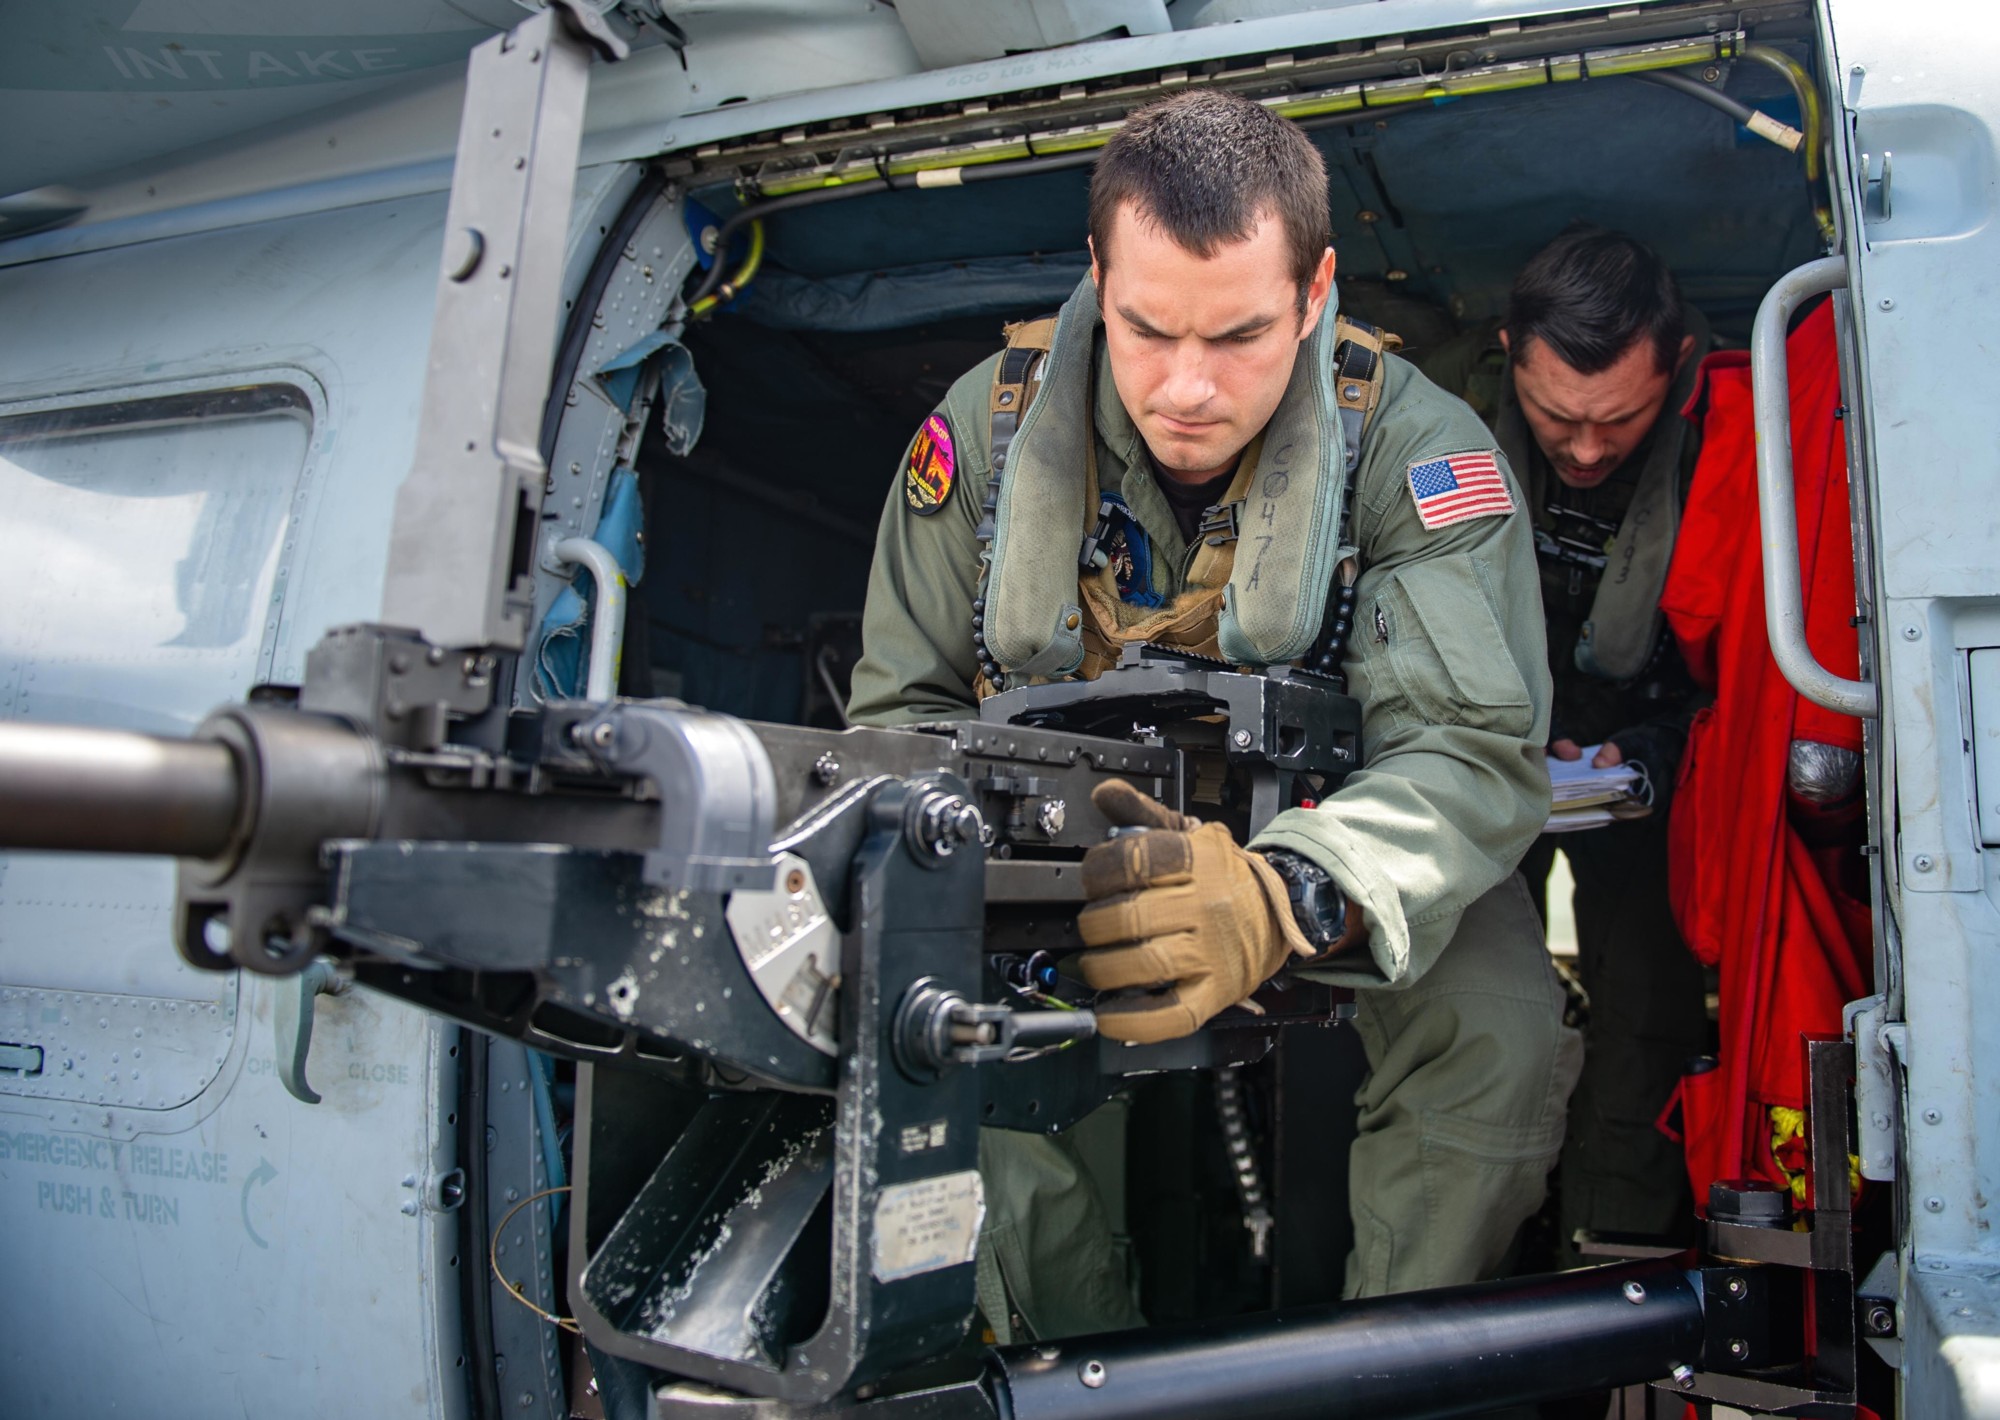 hsm-72 proud warriors helicopter maritime strike squadron mh-60r seahawk caliber .50 door gun 54